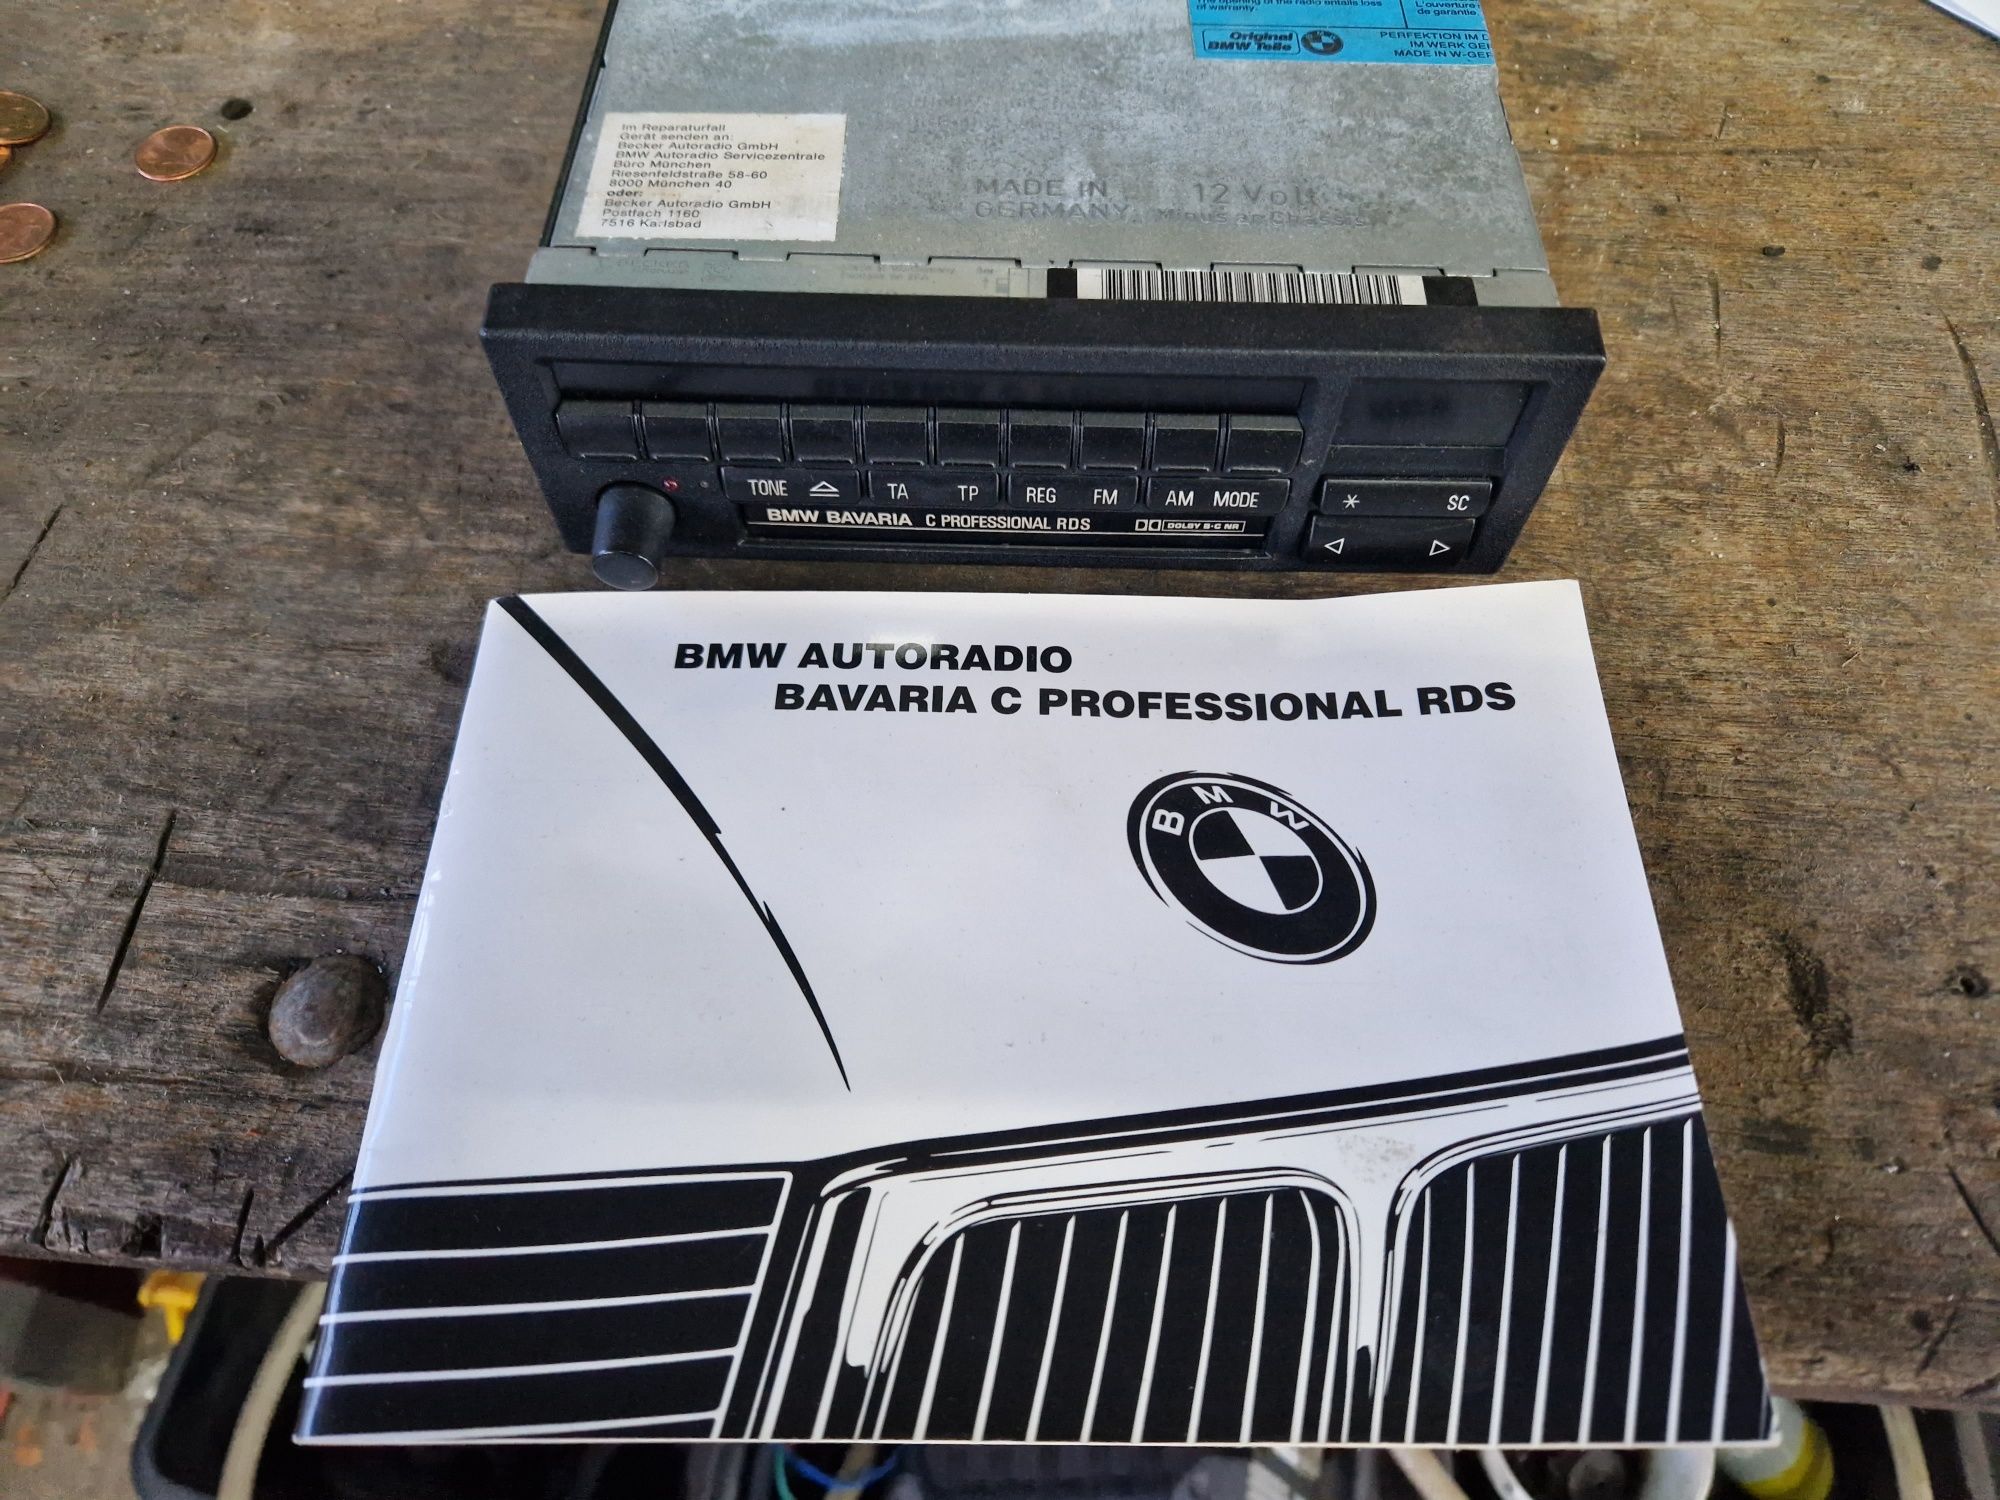 Radio  BMW Bavaria  C PROFESSIONAL rds